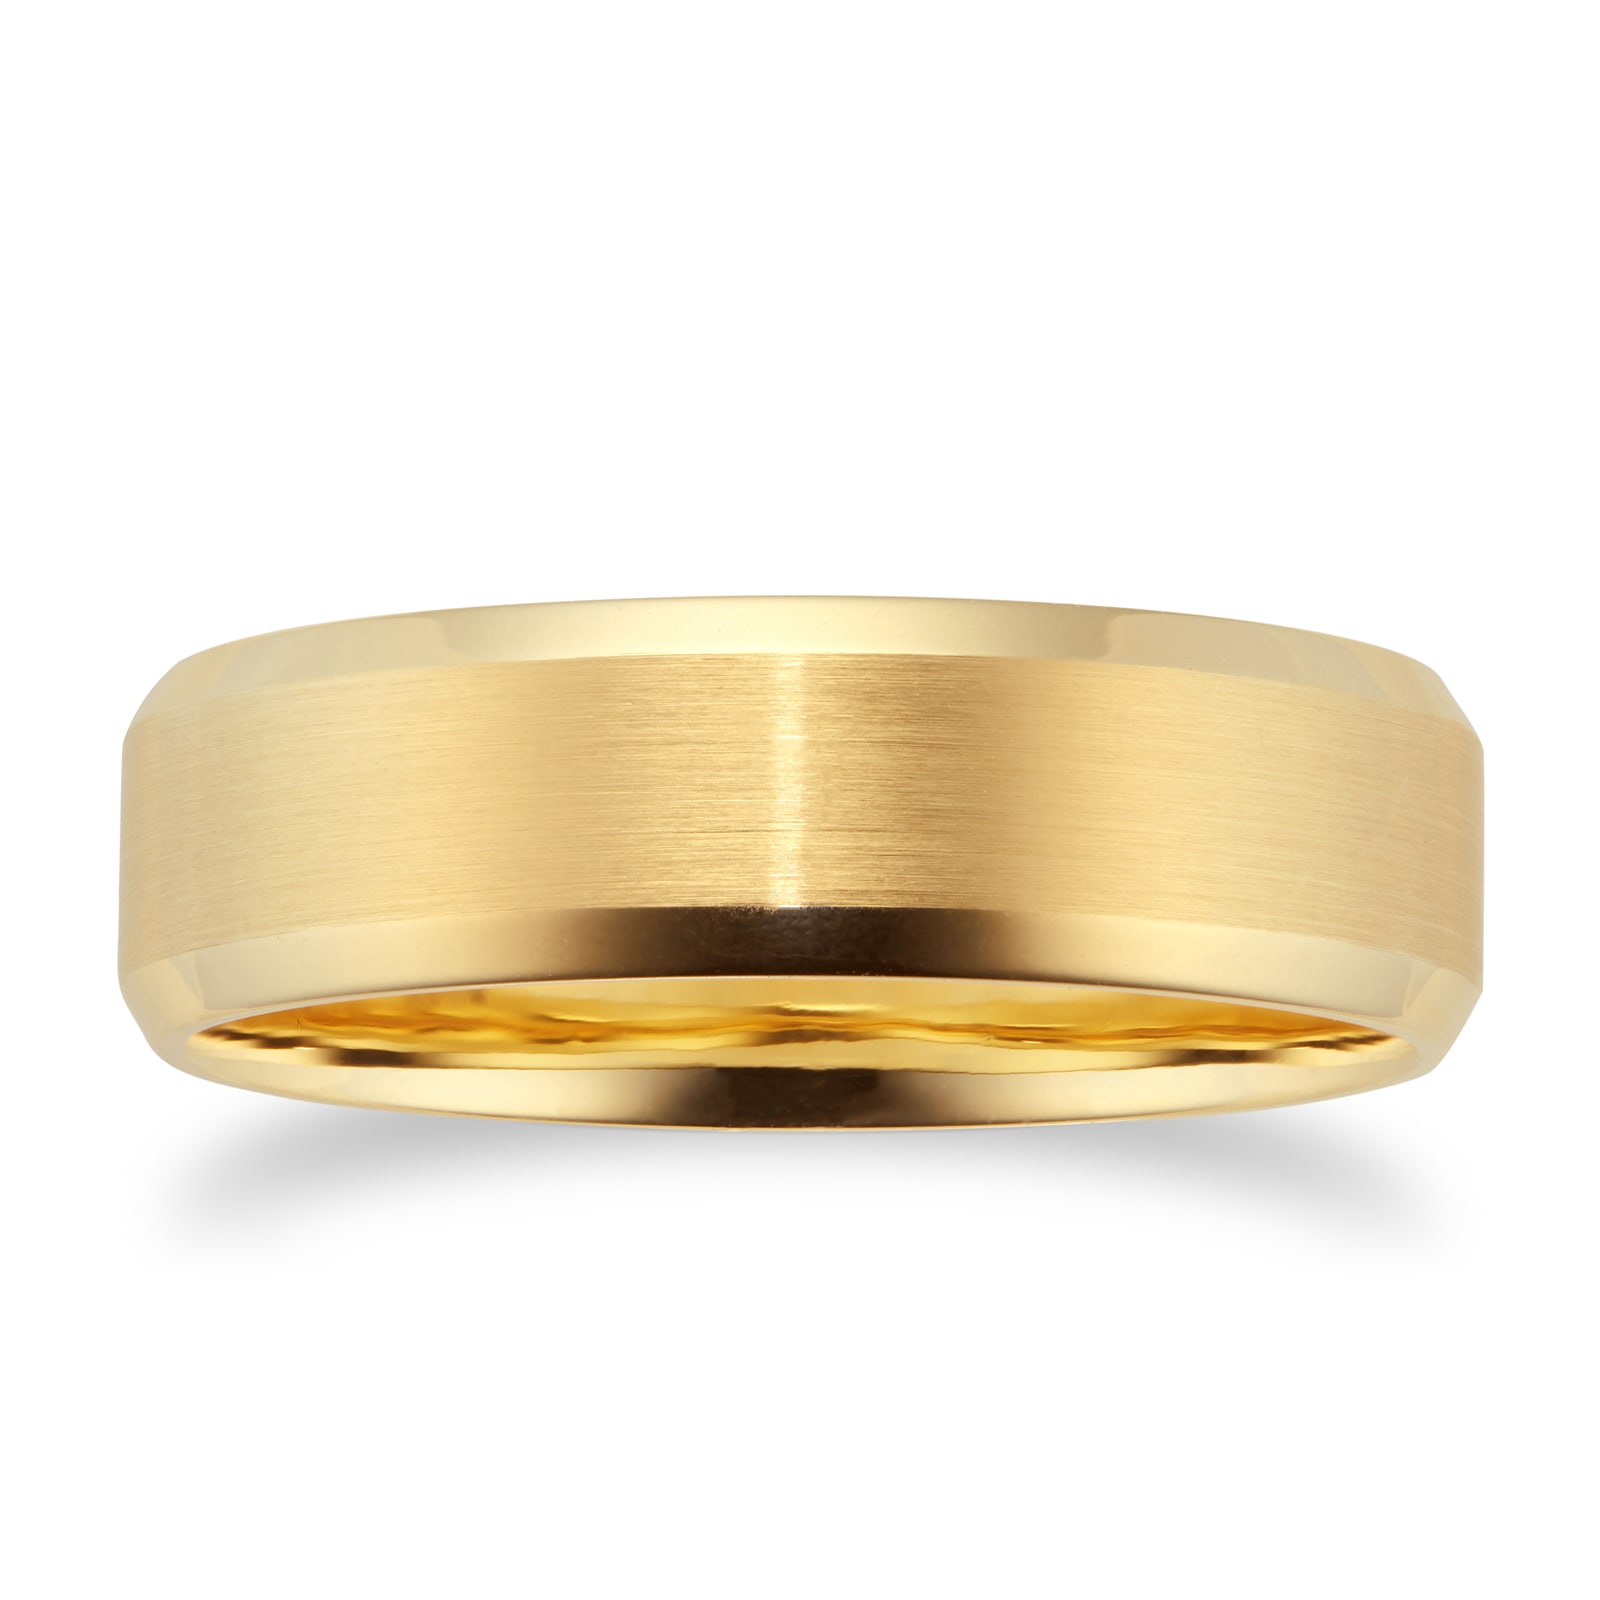 18ct Yellow Gold Mens Fancy Edge Wedding Ring - Ring Size Q